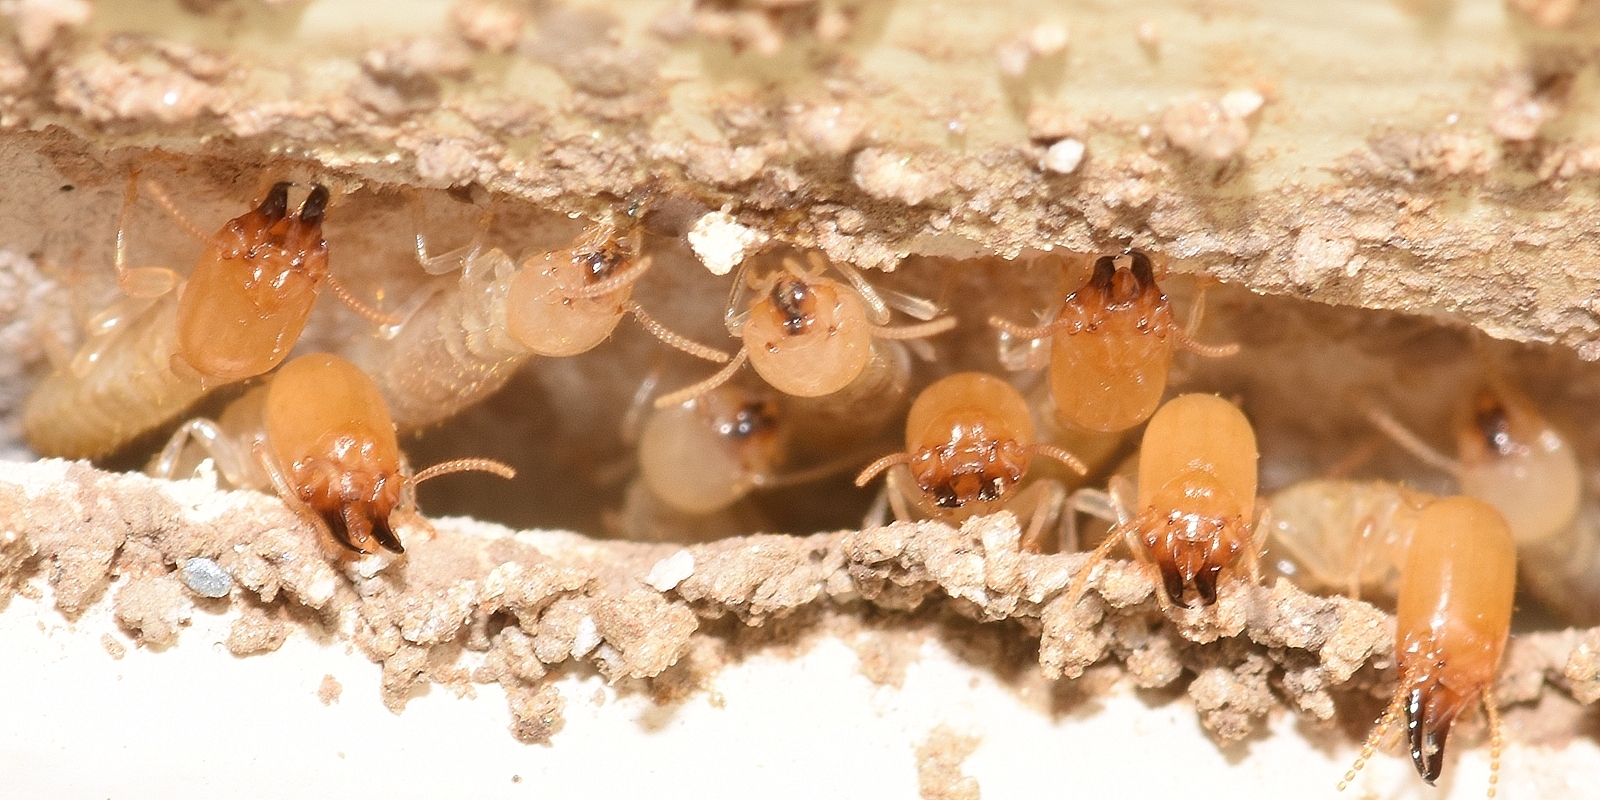 Termite Control Experts